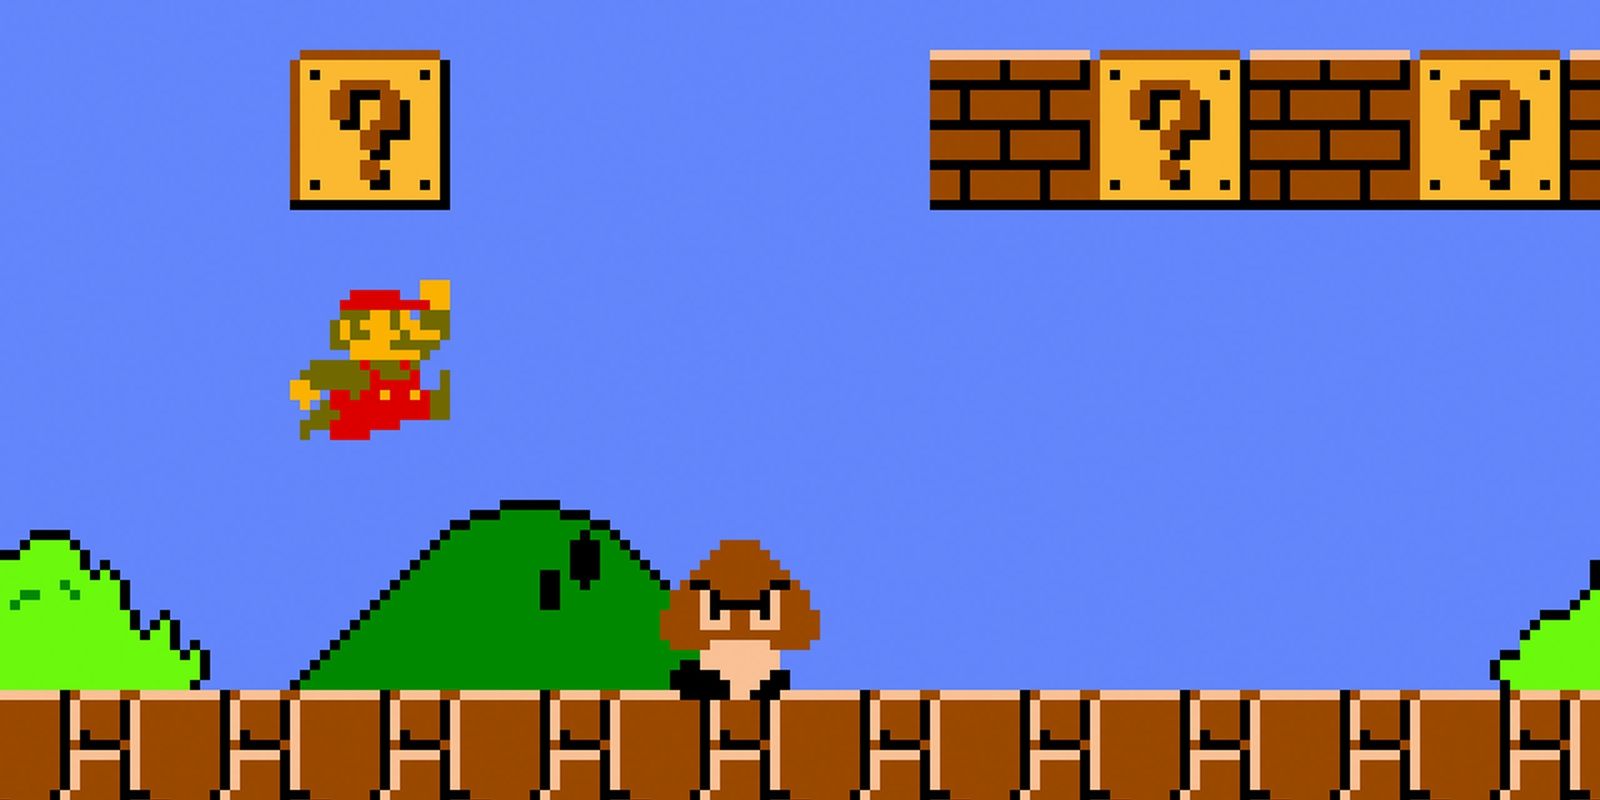 Mario Jumping on Goomba in Super Mario Bros (1985)